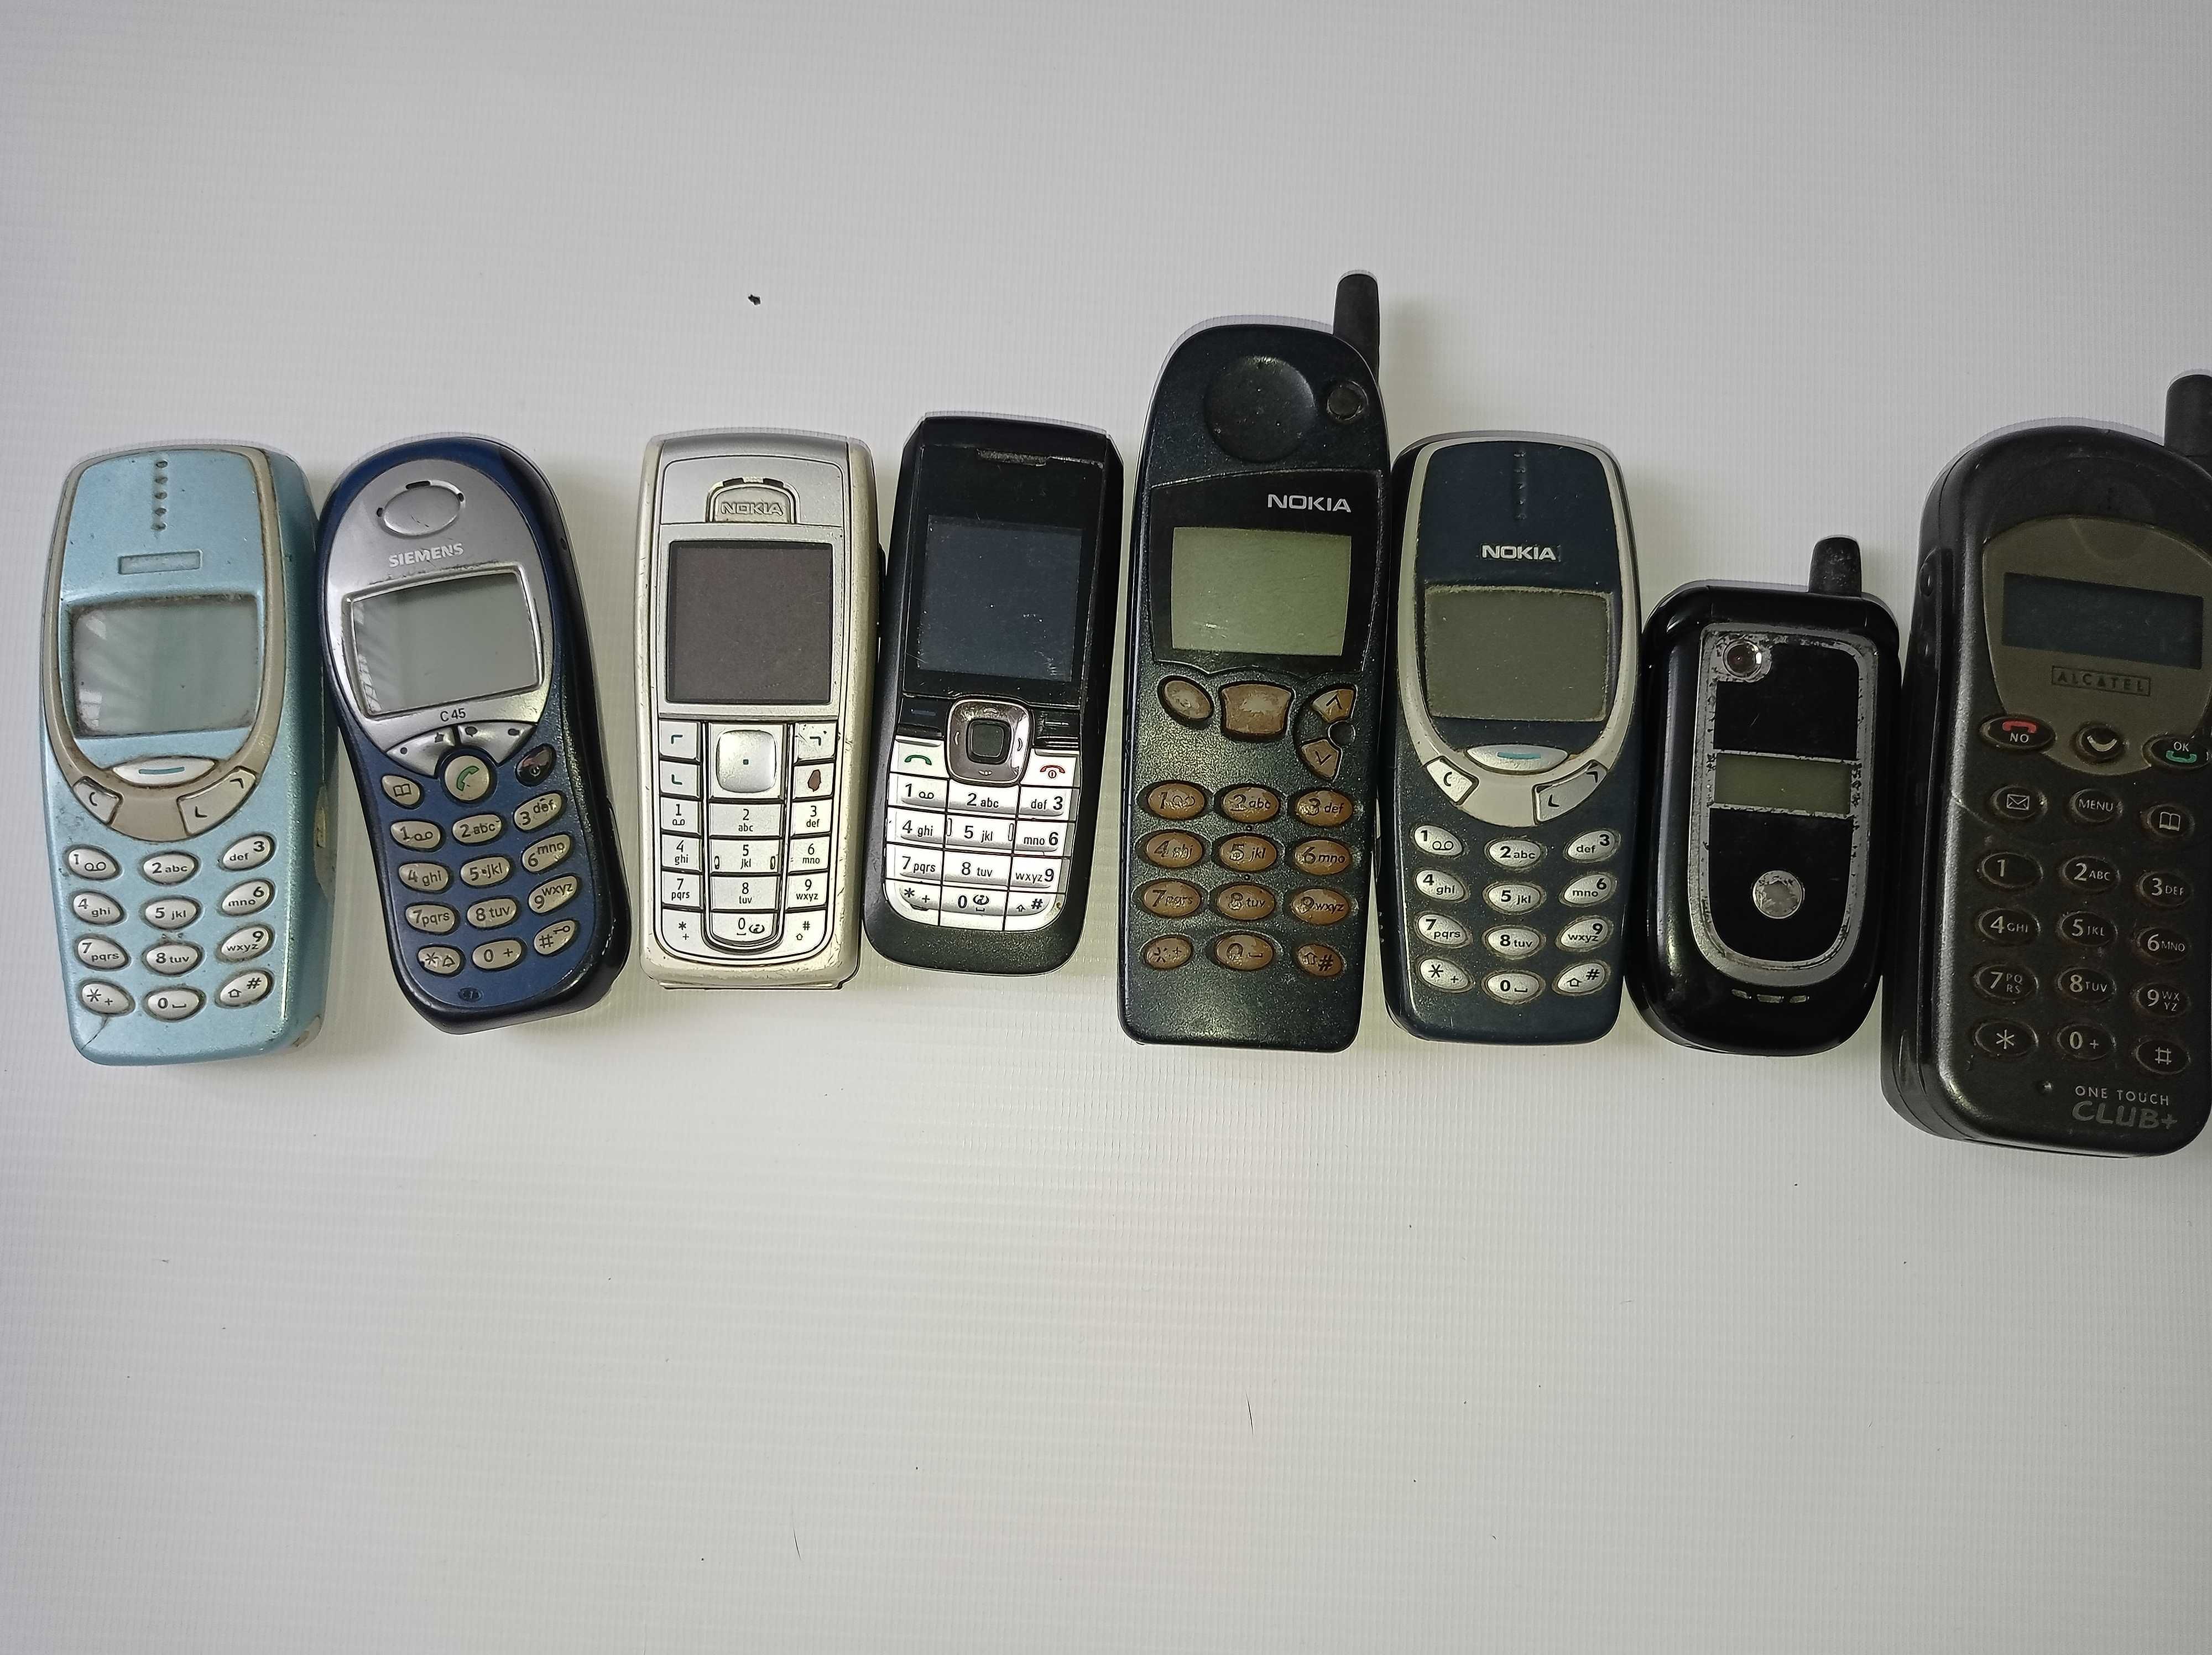 Stare telefony komórkowe - Nokia, Alcatel, Siemens, Motorola -9 sztuk.